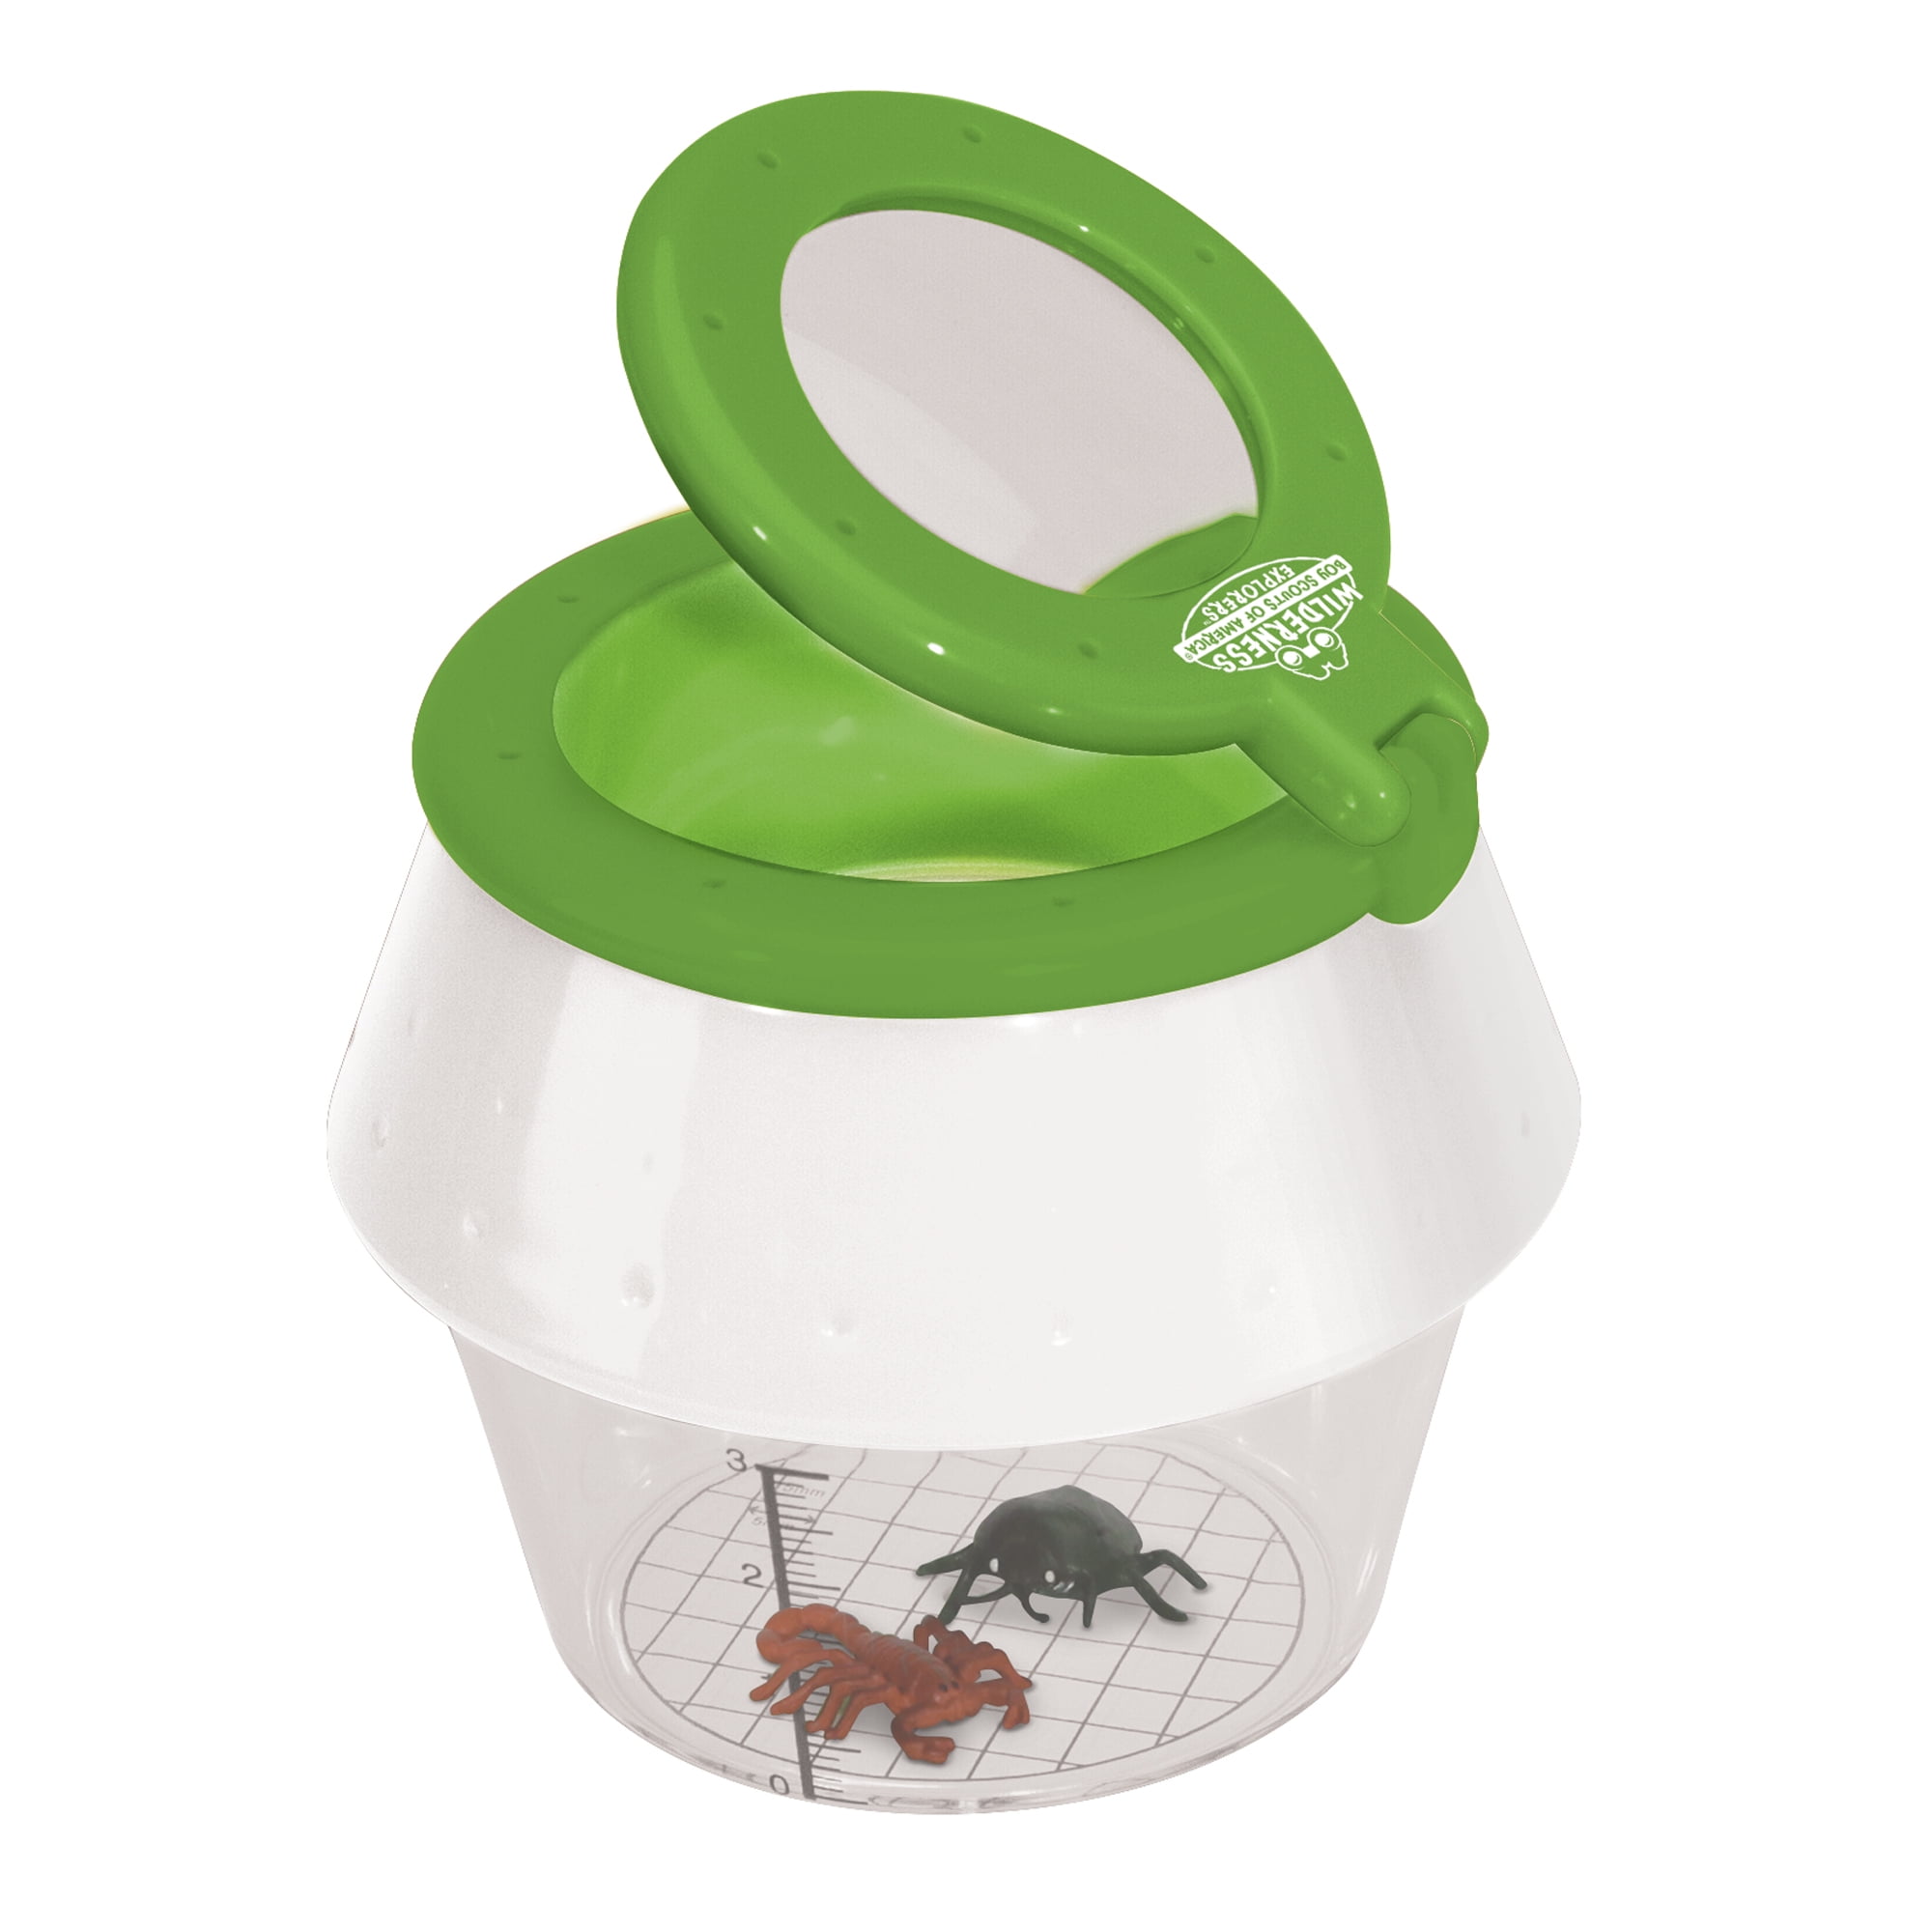 Bug Pot/ Bug Jar Set Includes Insect Spotter Cards & Magnifying Glass 